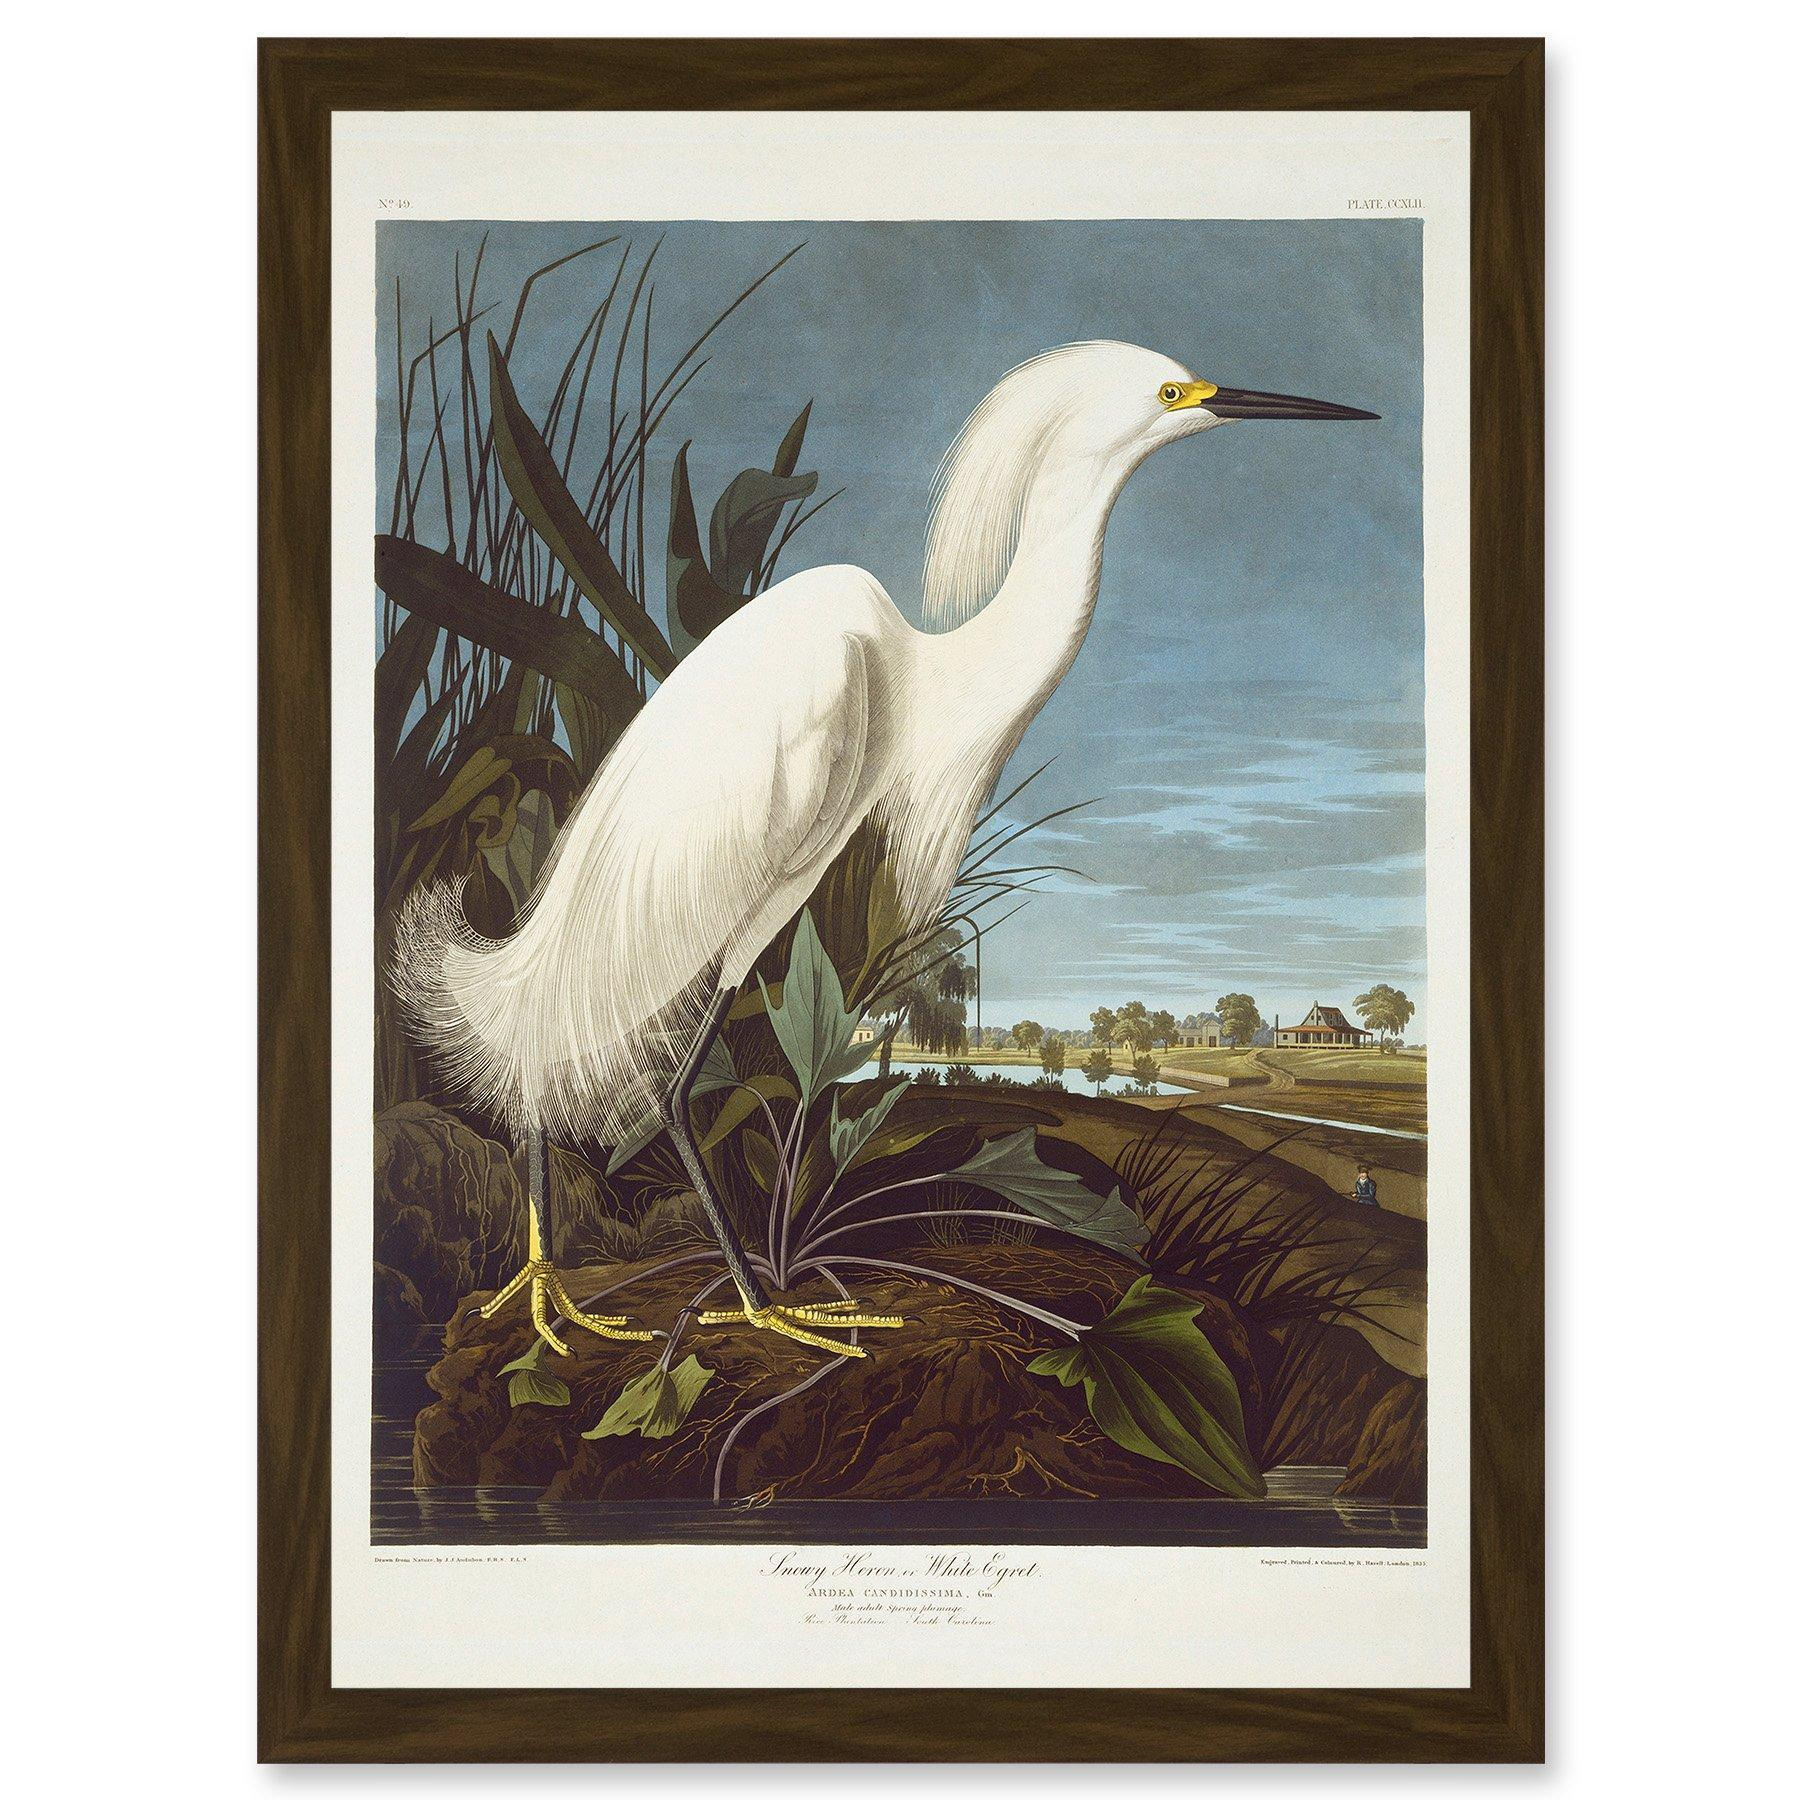 Painting Bird Audubon Snowy Heron Egret Artwork Framed Wall Art Print A4 - image 1